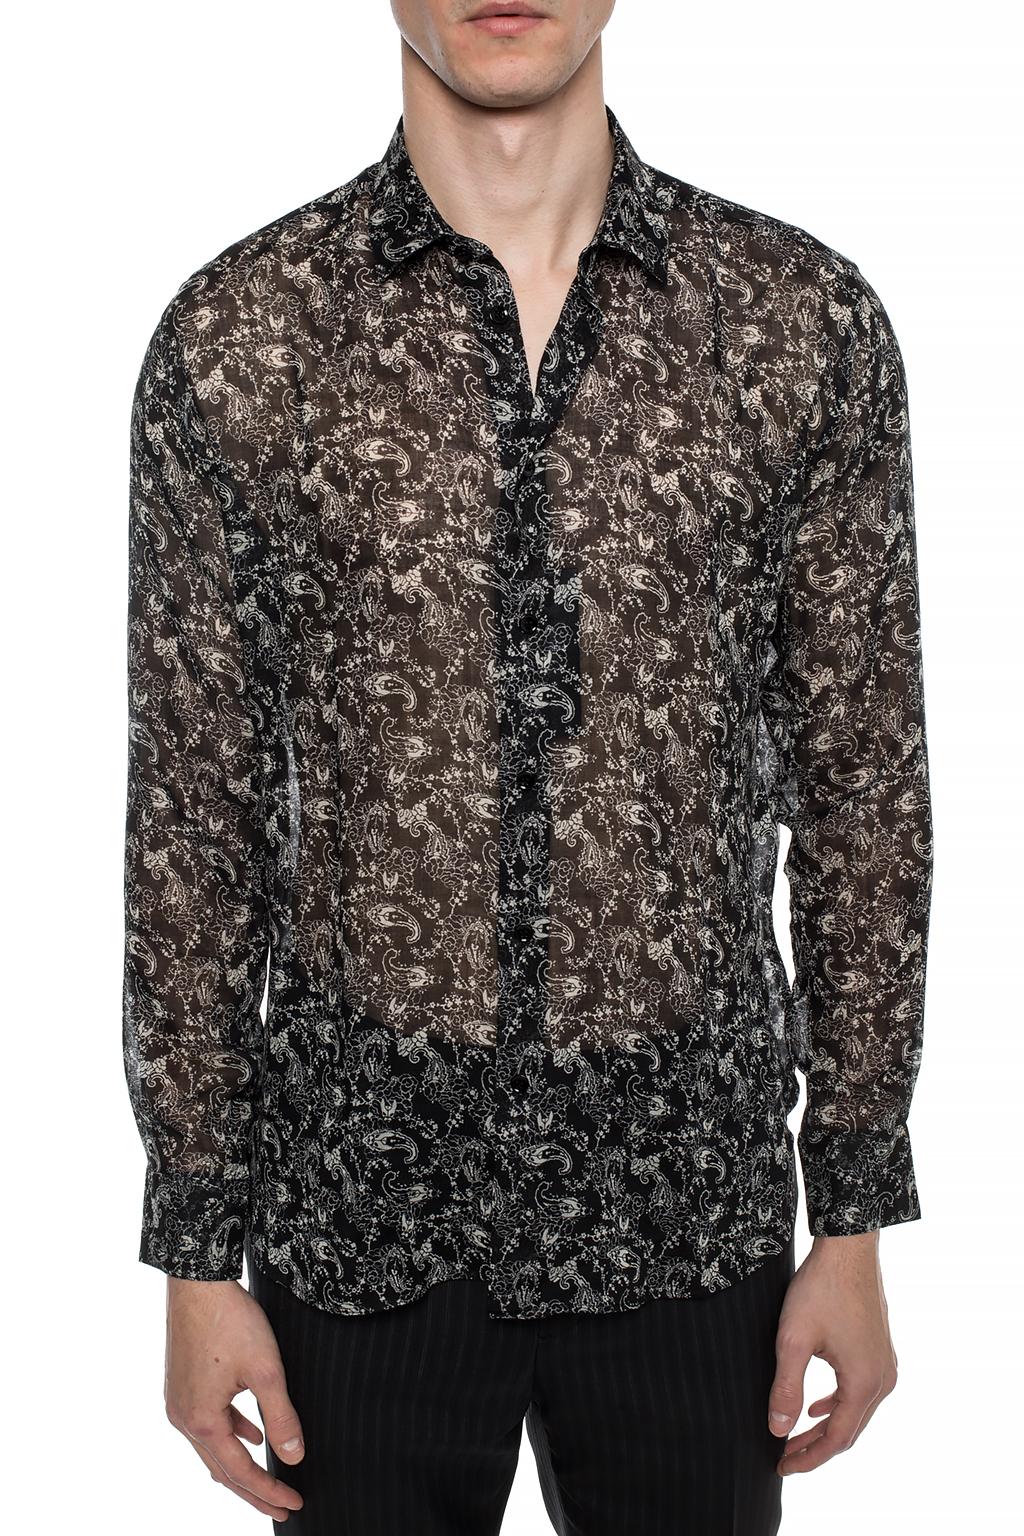 Saint Laurent Embroidered sheer shirt | Men's Clothing | Vitkac